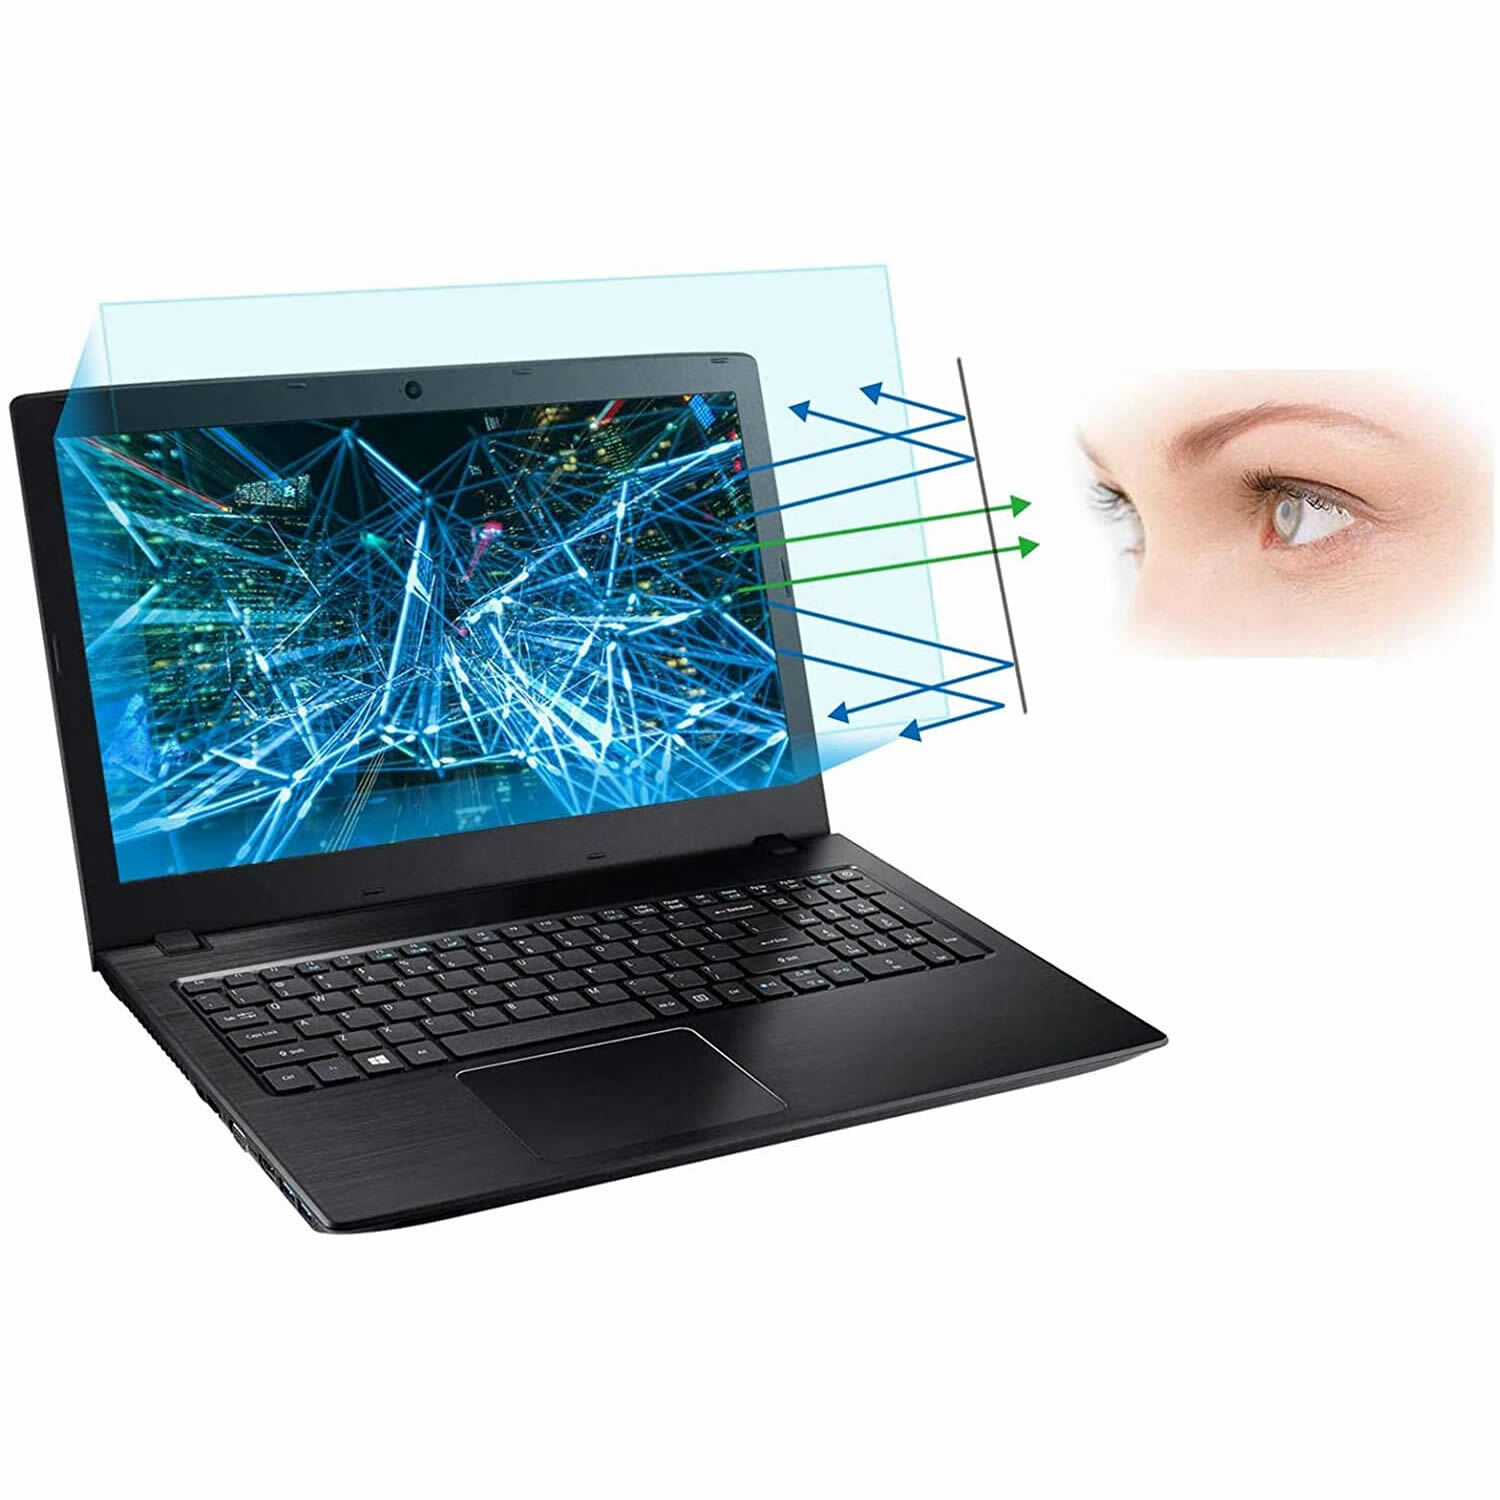 2x Anti Glare Screen Protector For 15.6" Dell Inspiron 15 7000 7506 2in1 Laptop